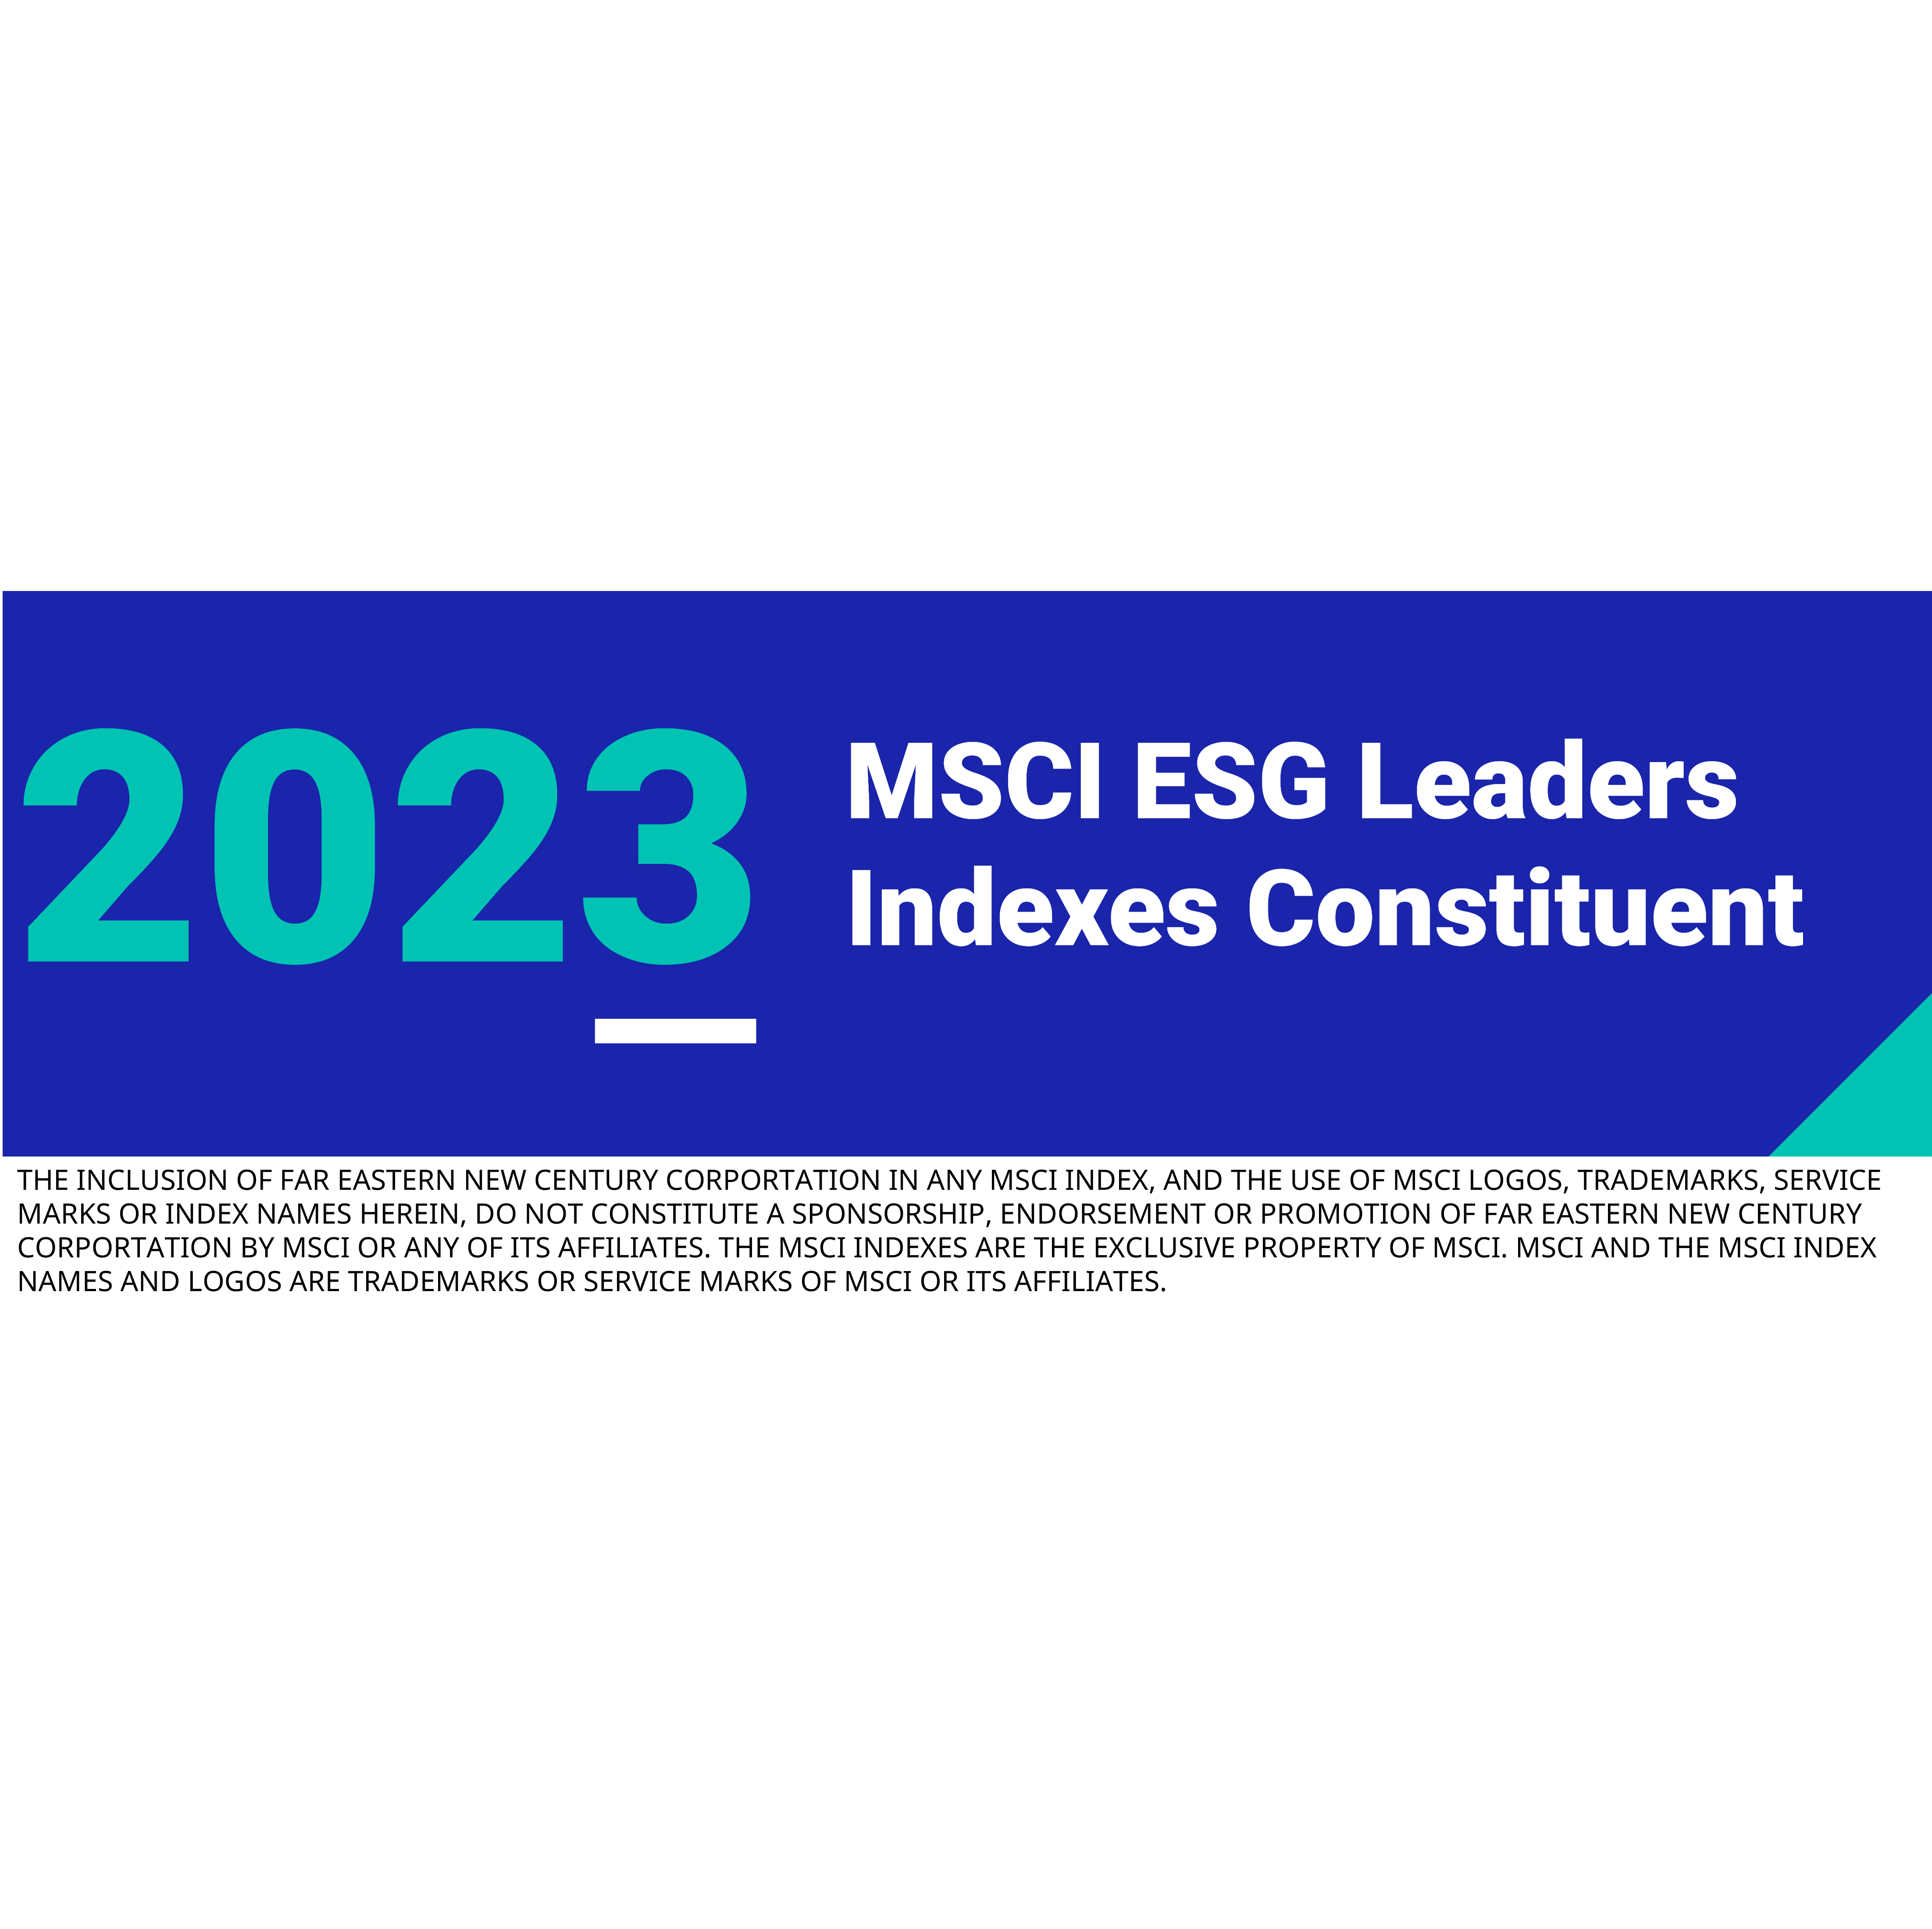 Constituent of MSCI ESG Leaders Indexes